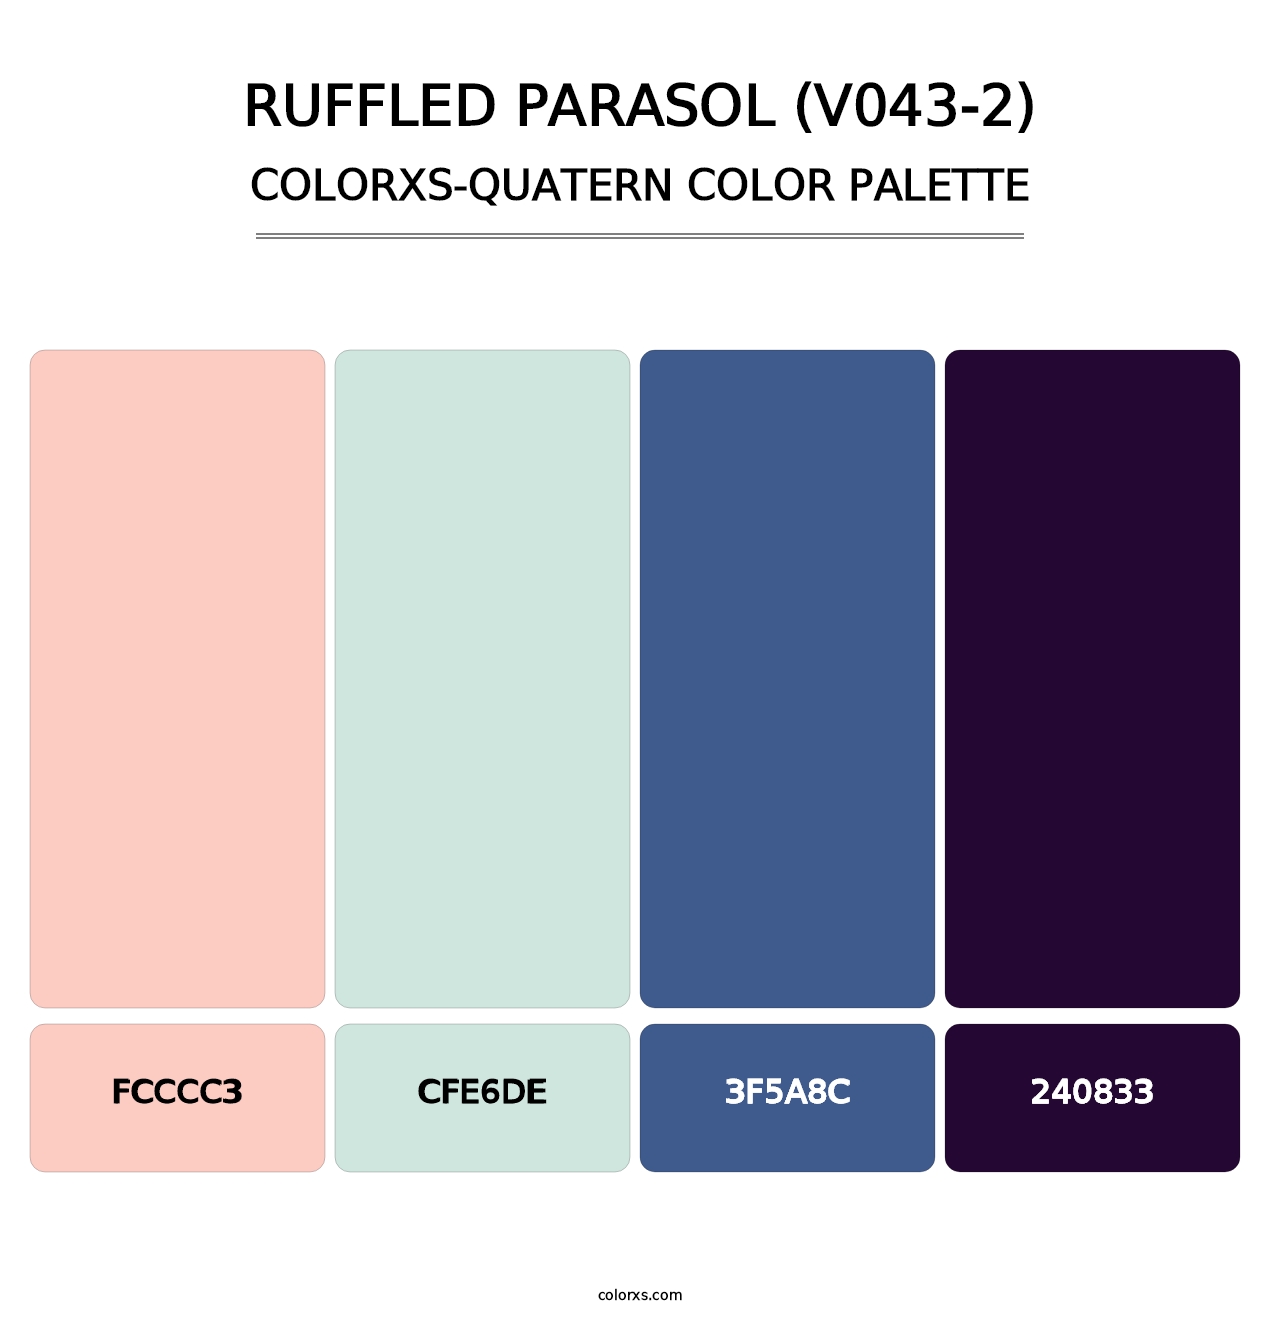 Ruffled Parasol (V043-2) - Colorxs Quatern Palette